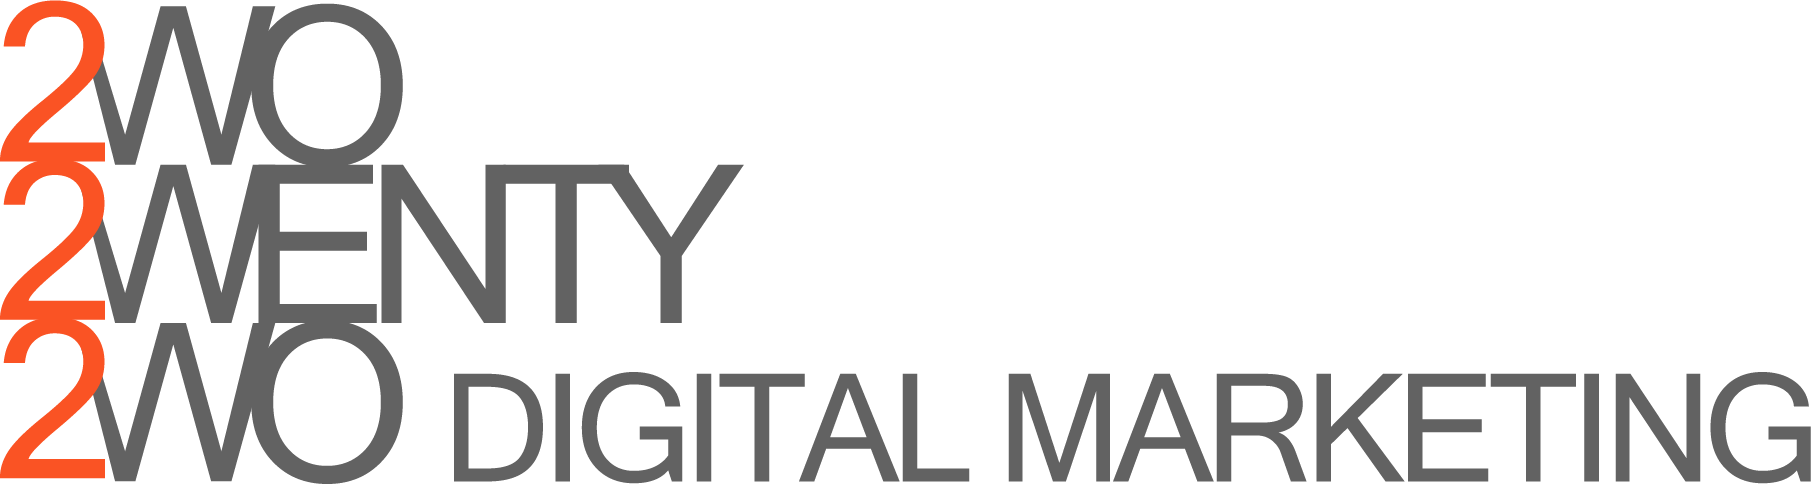 222 Digital Marketing Agency Chicago - Profit Generating Online Marketing Leads